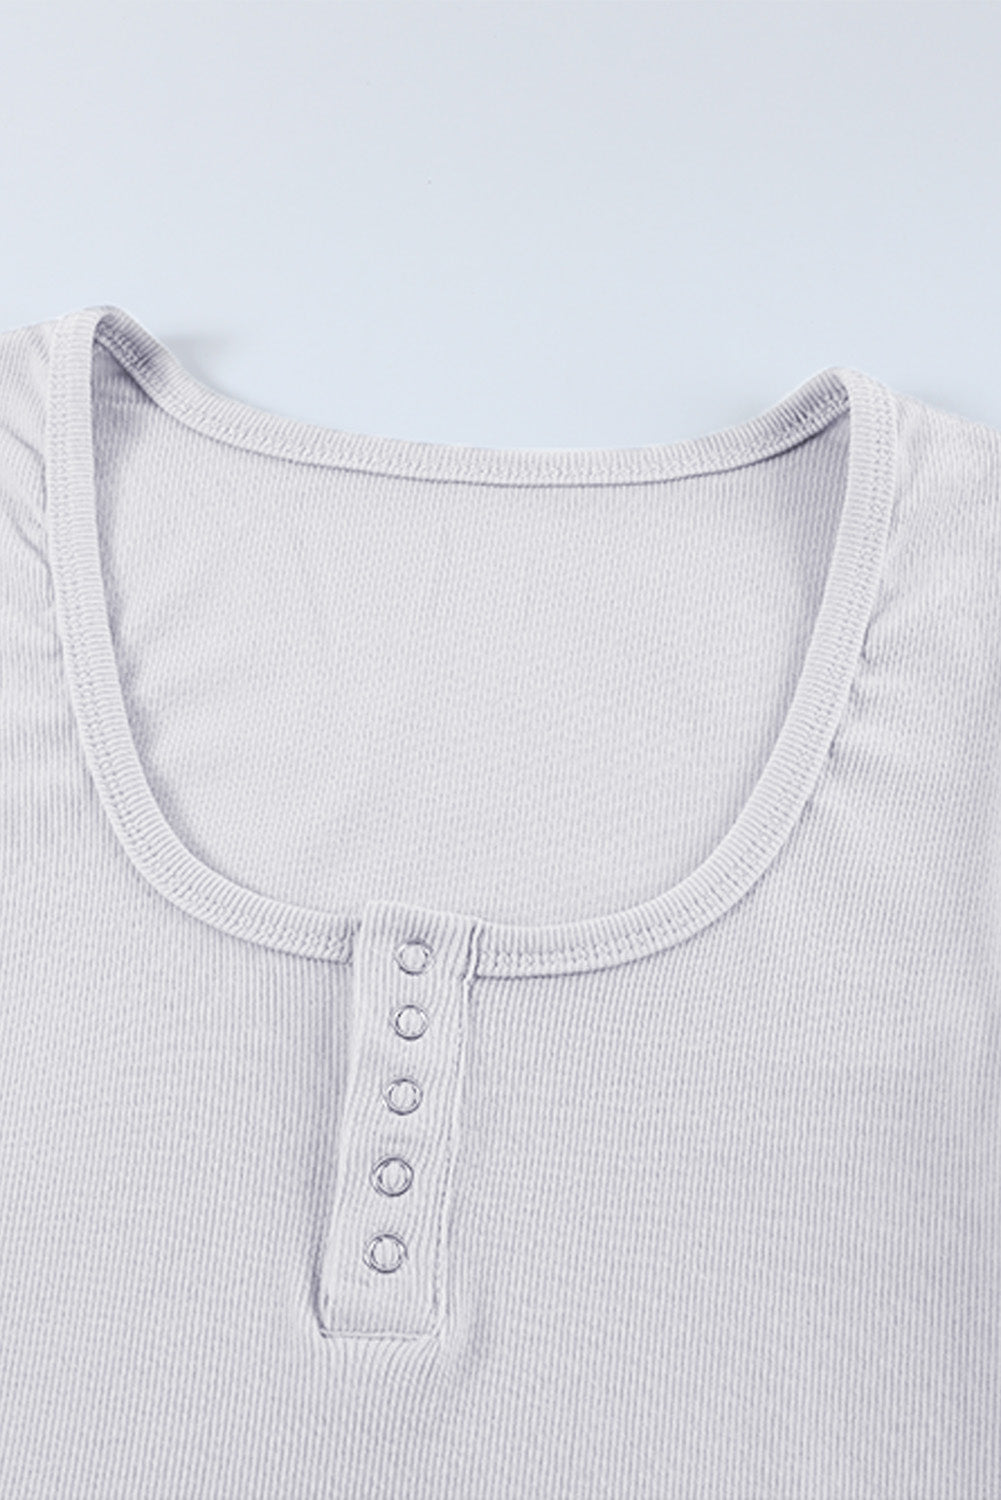 Gray U Neck Button Knit Long Sleeve Top Long Sleeve Tops JT's Designer Fashion